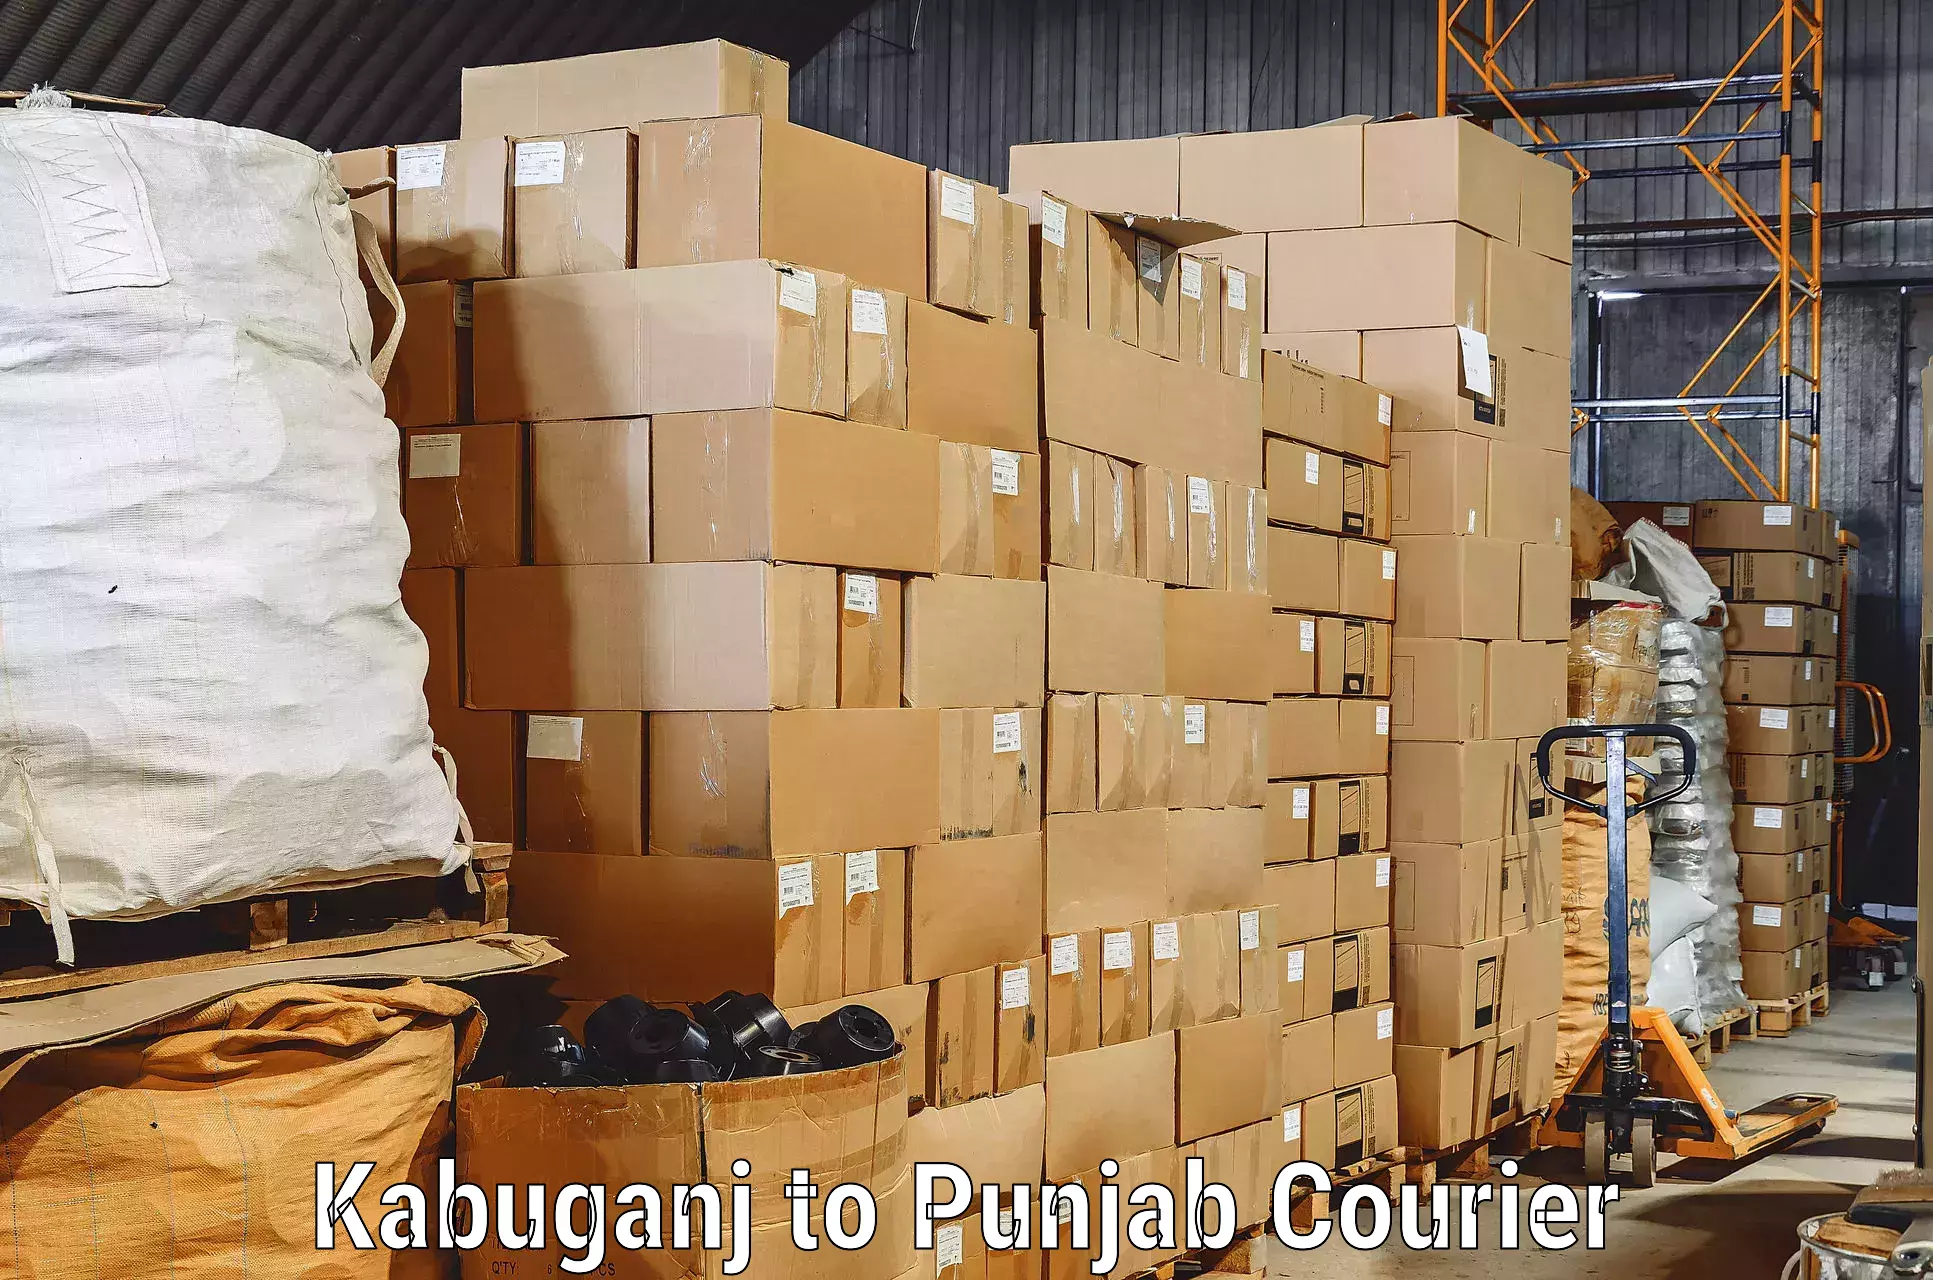 Reliable goods transport in Kabuganj to Jalalabad